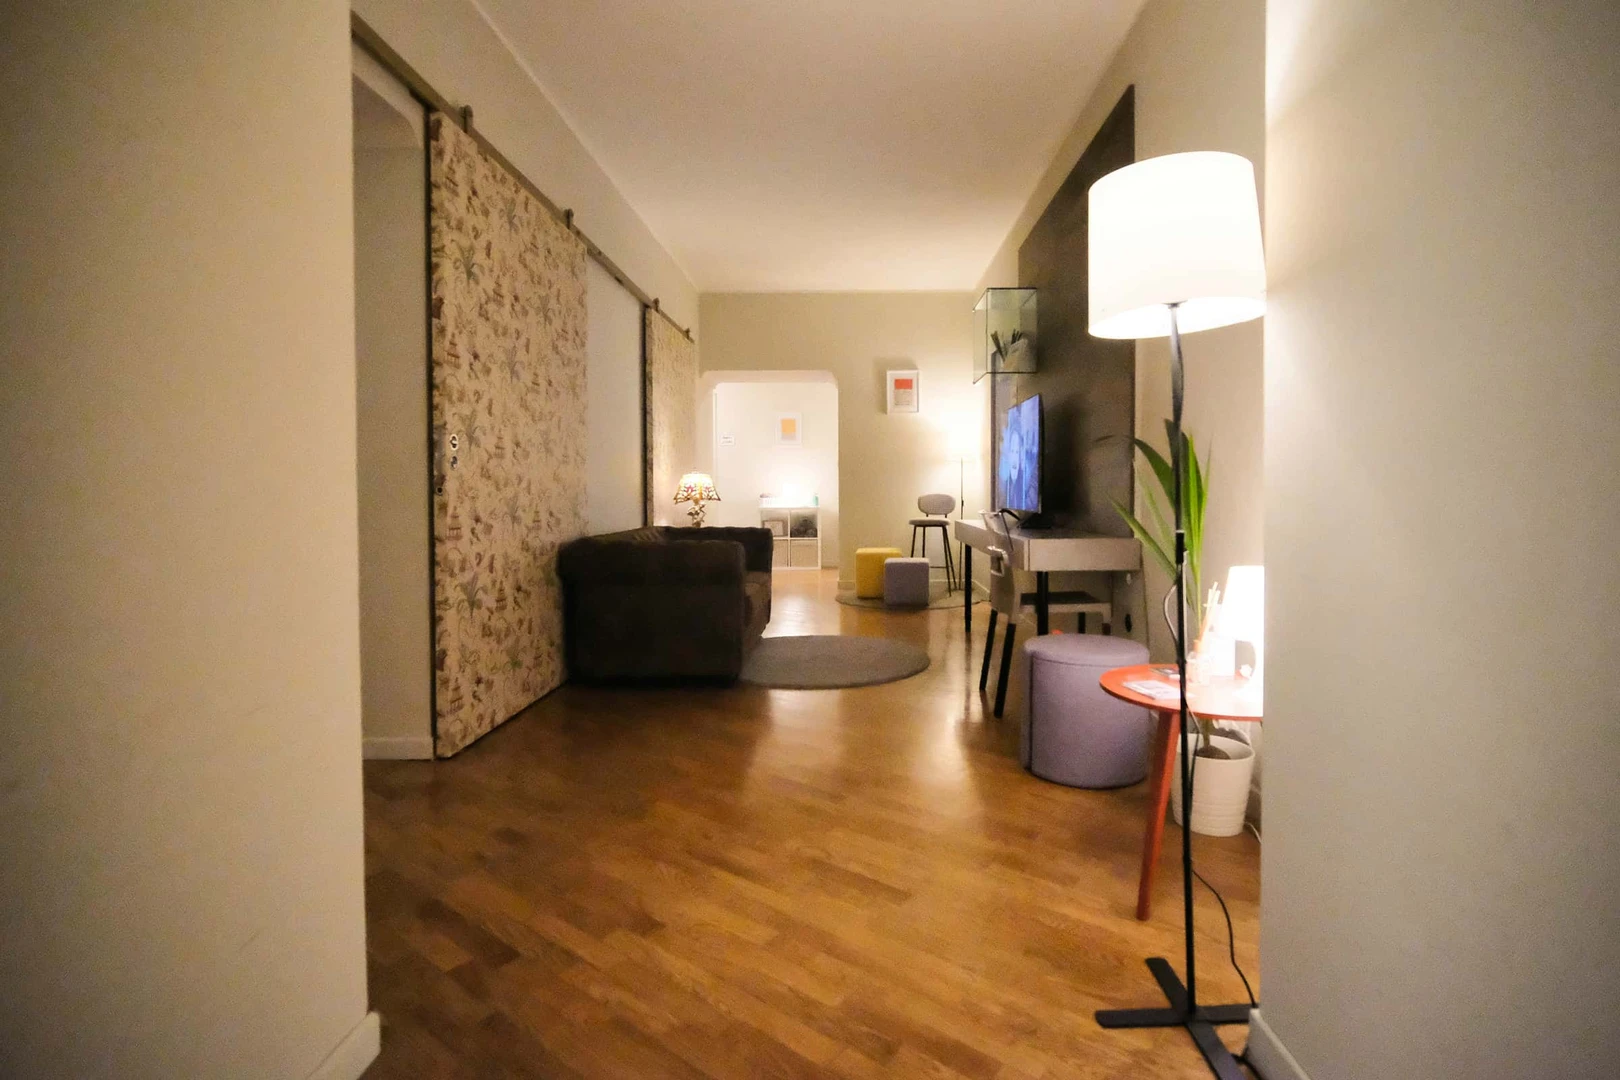 Shared room in 3-bedroom flat torino